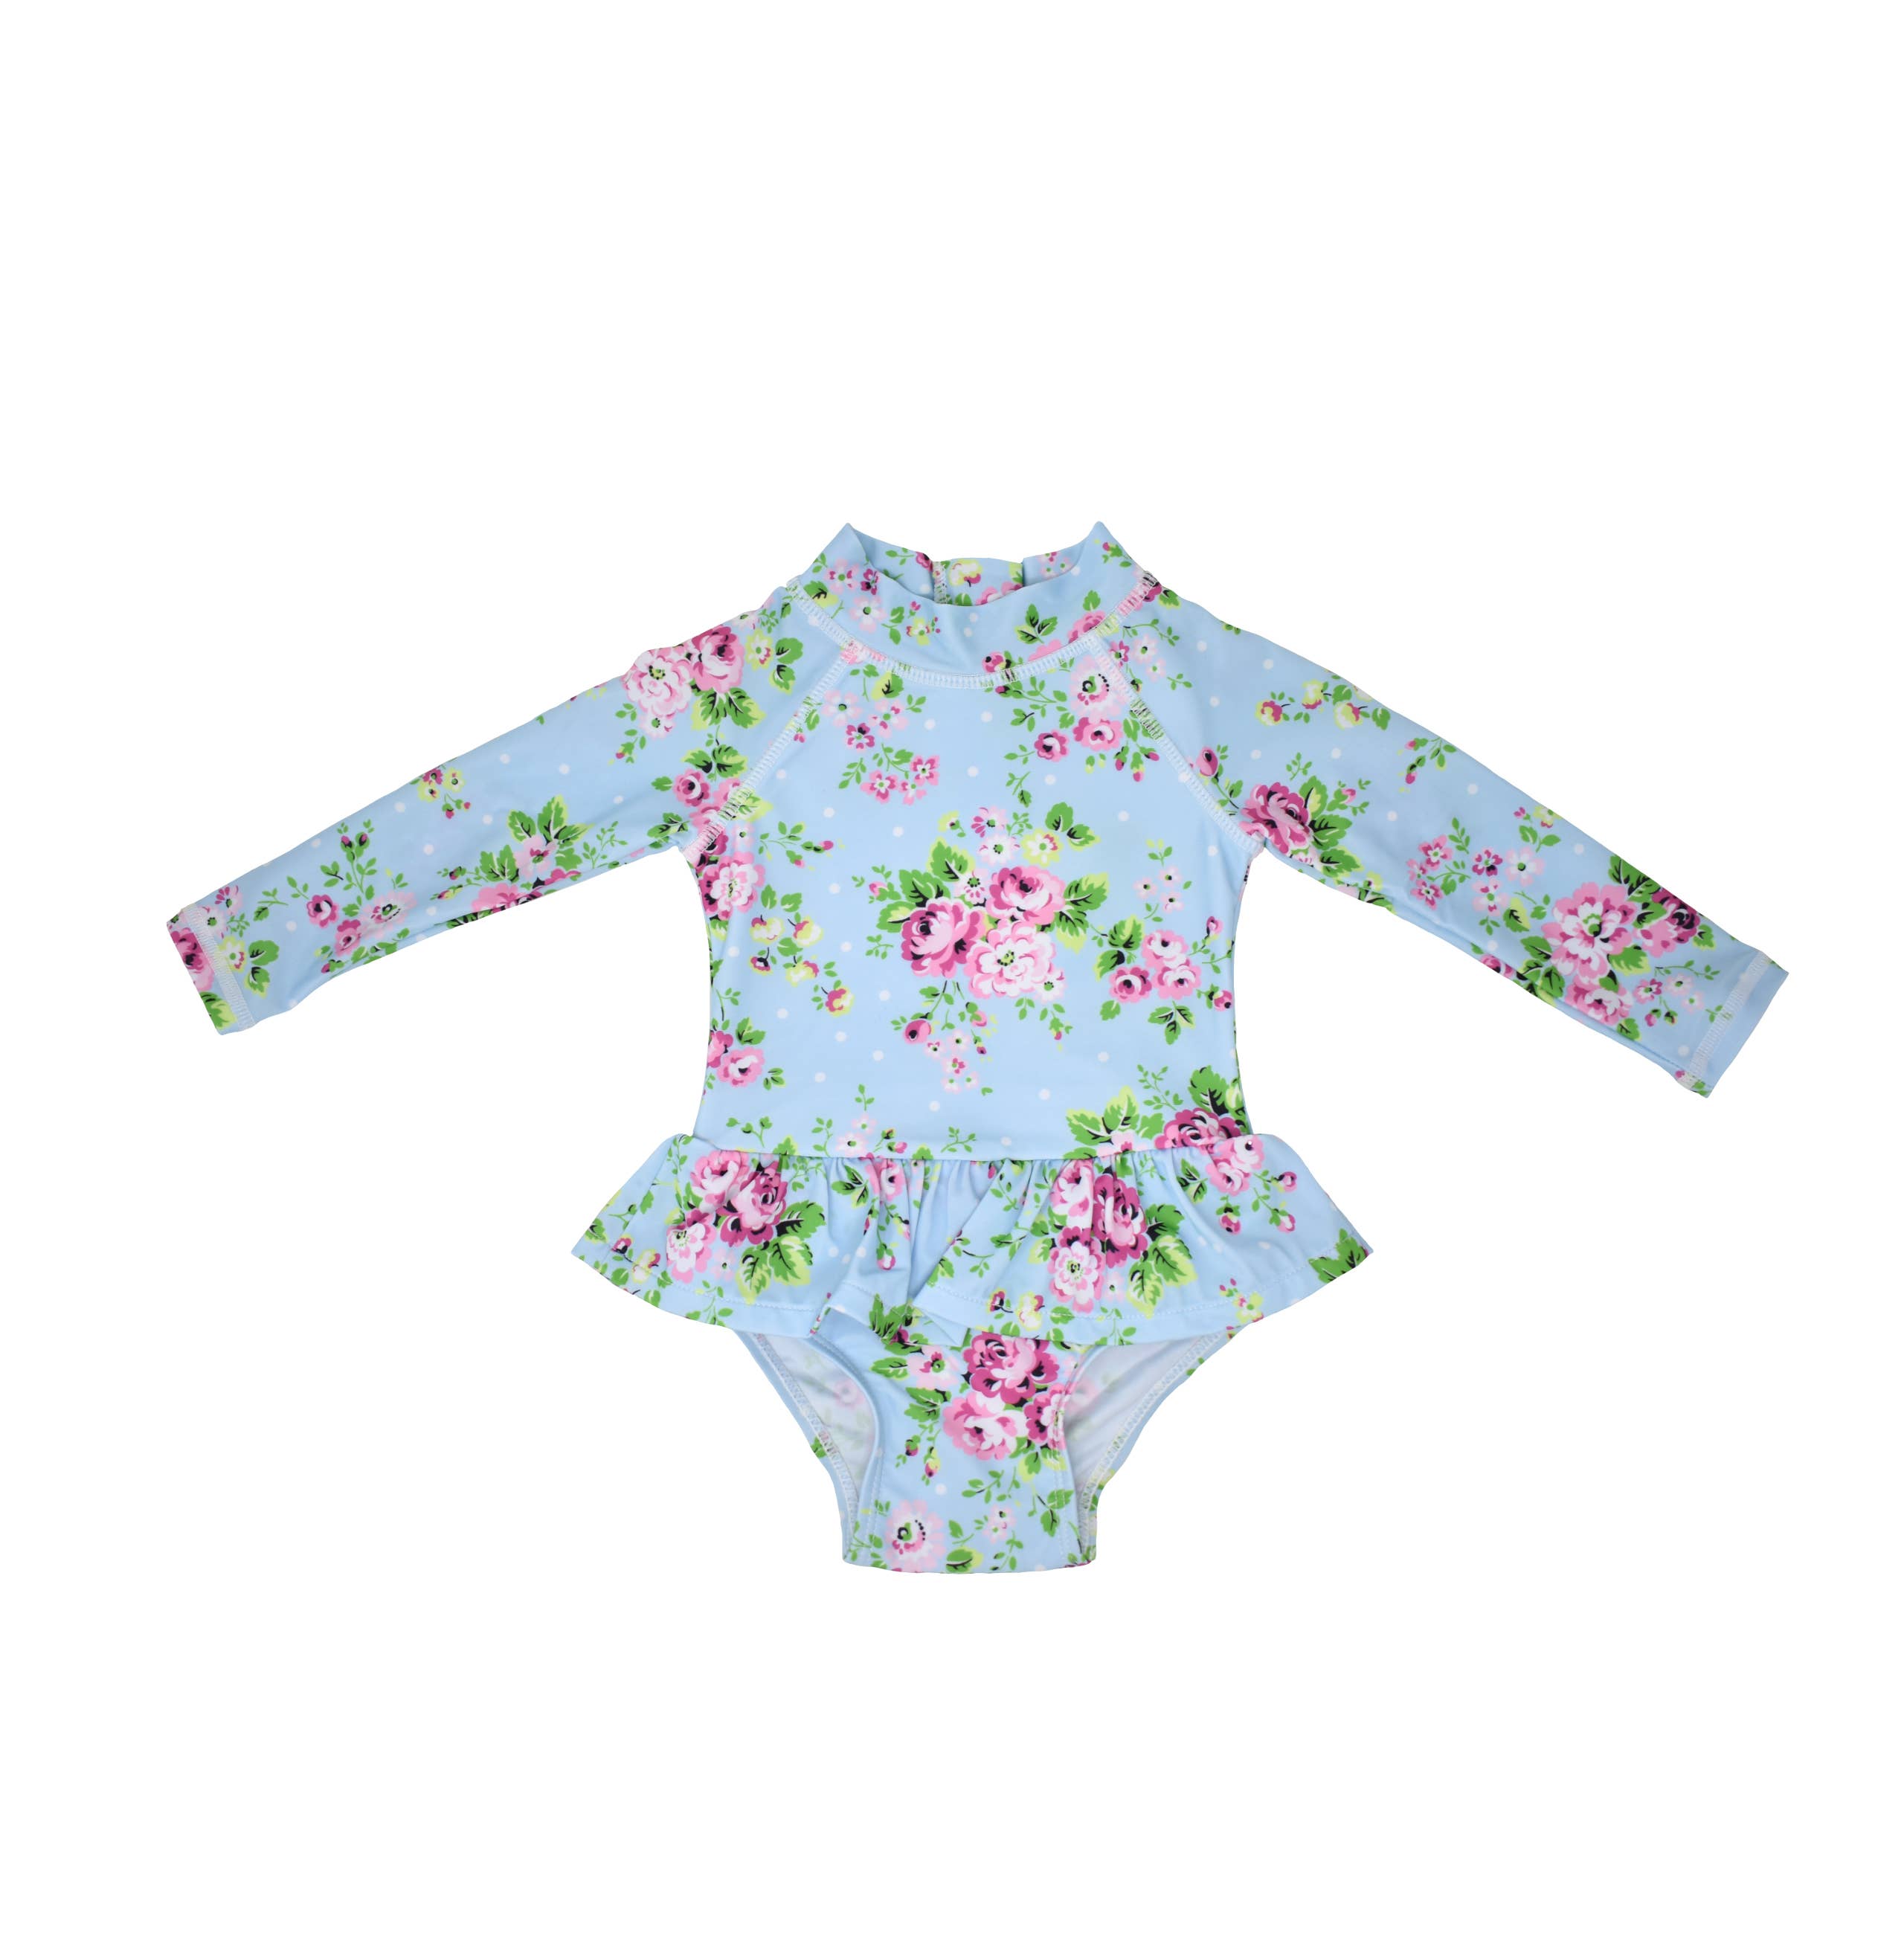 Baby UPF50+ Girls Alissa Infant Ruffle Rash Guard Swimsuit